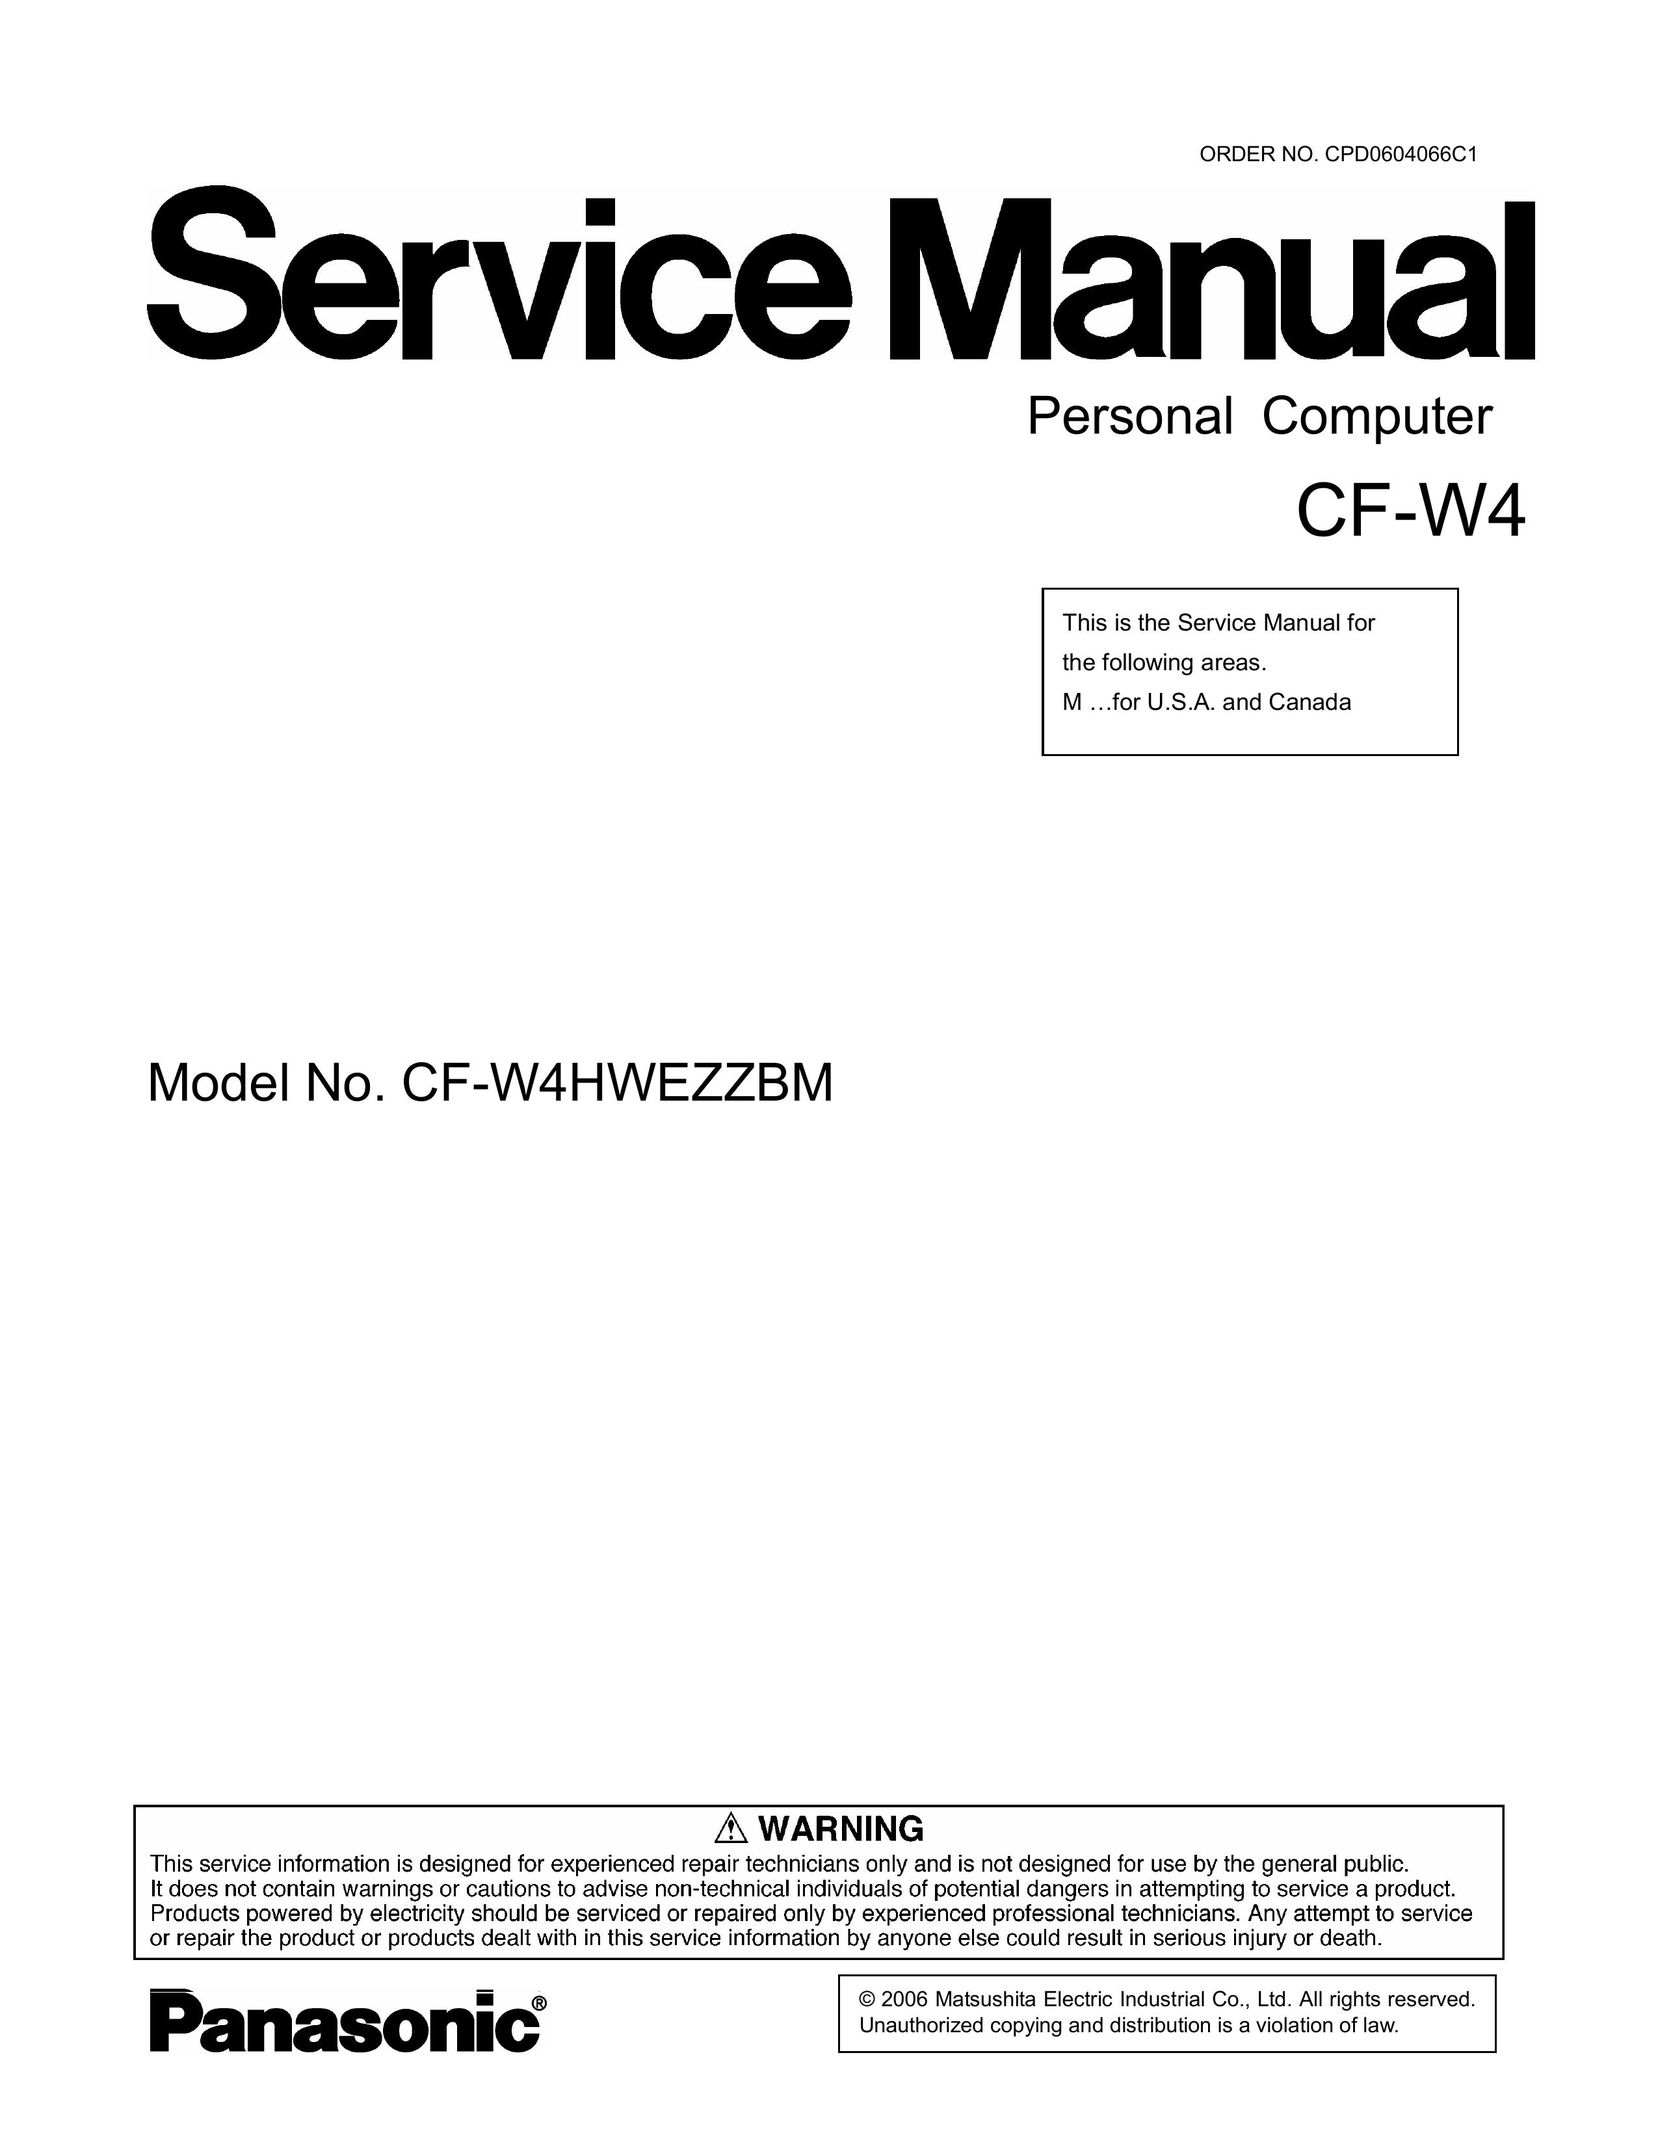 Matsushita CF-W4HWEZZBM Personal Computer User Manual